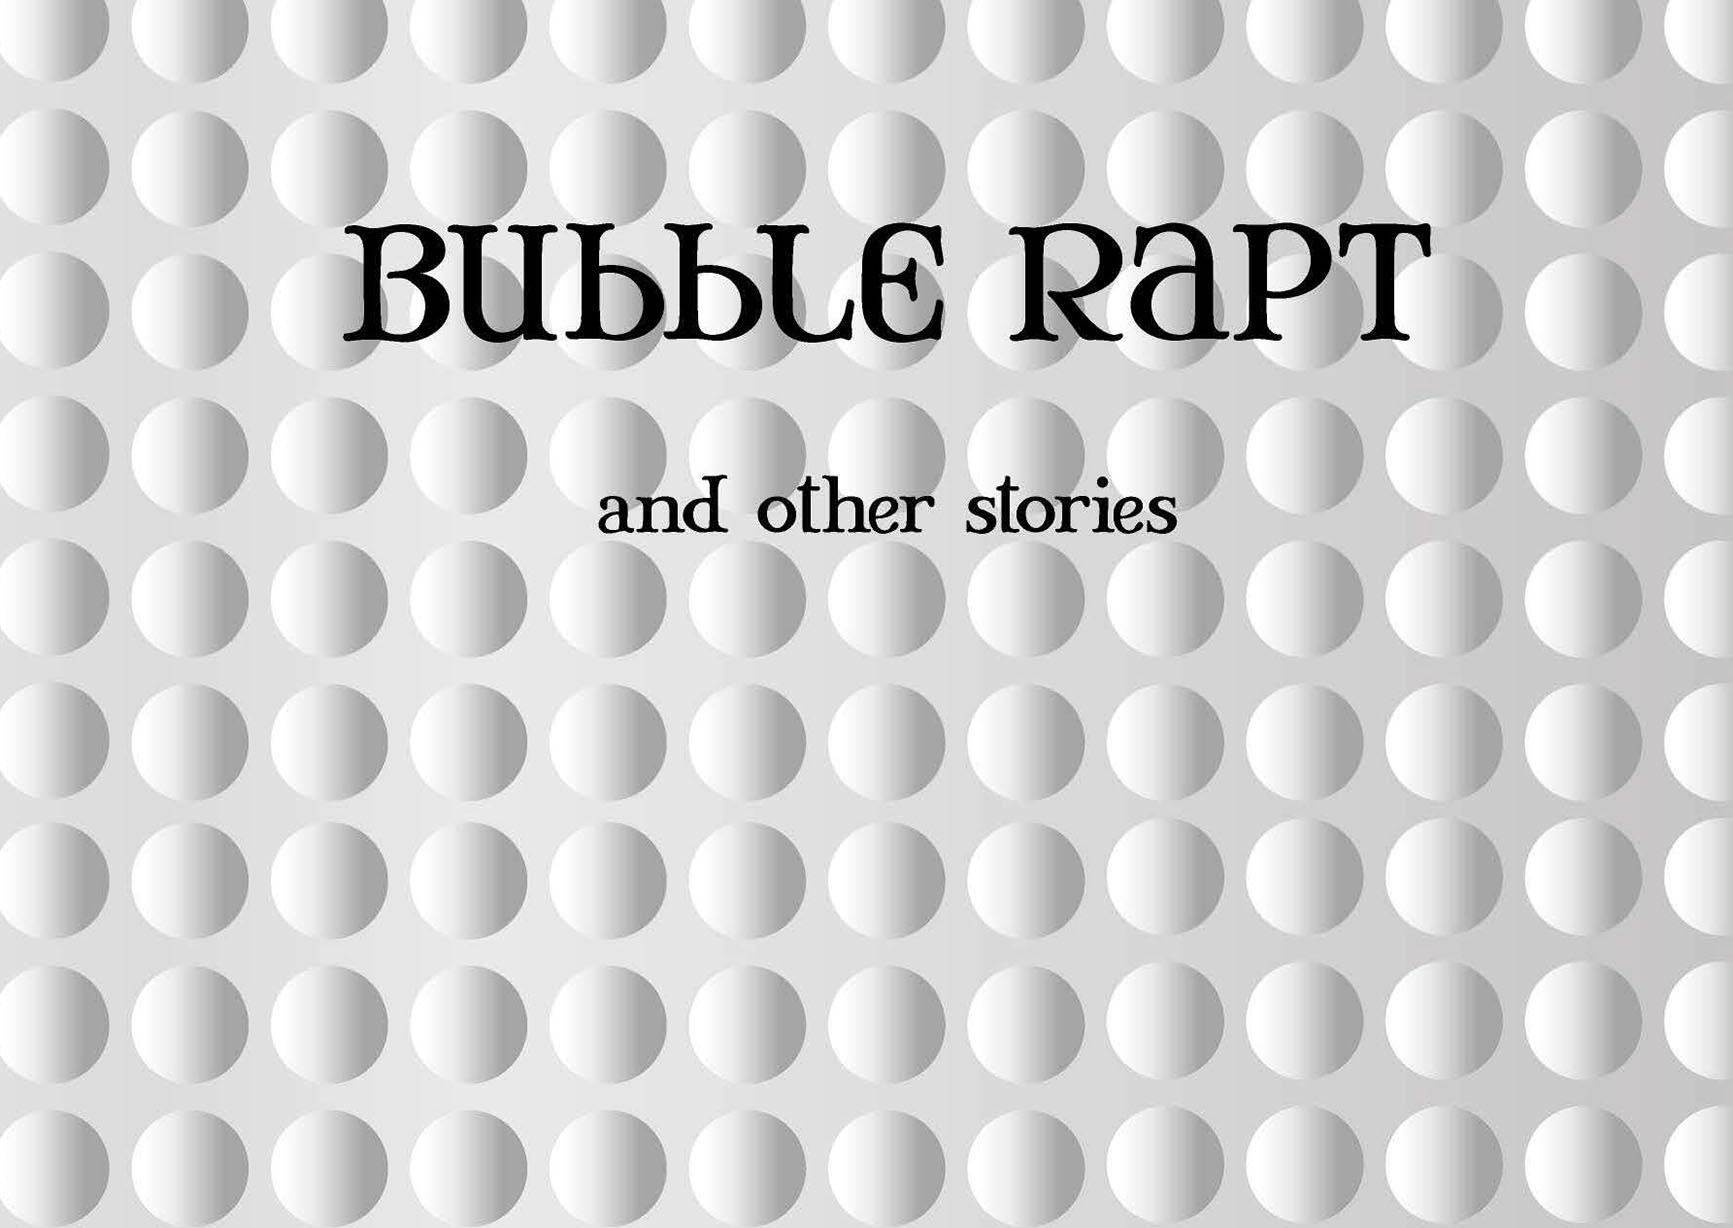 Bubble Rapt by Jane Goldsack